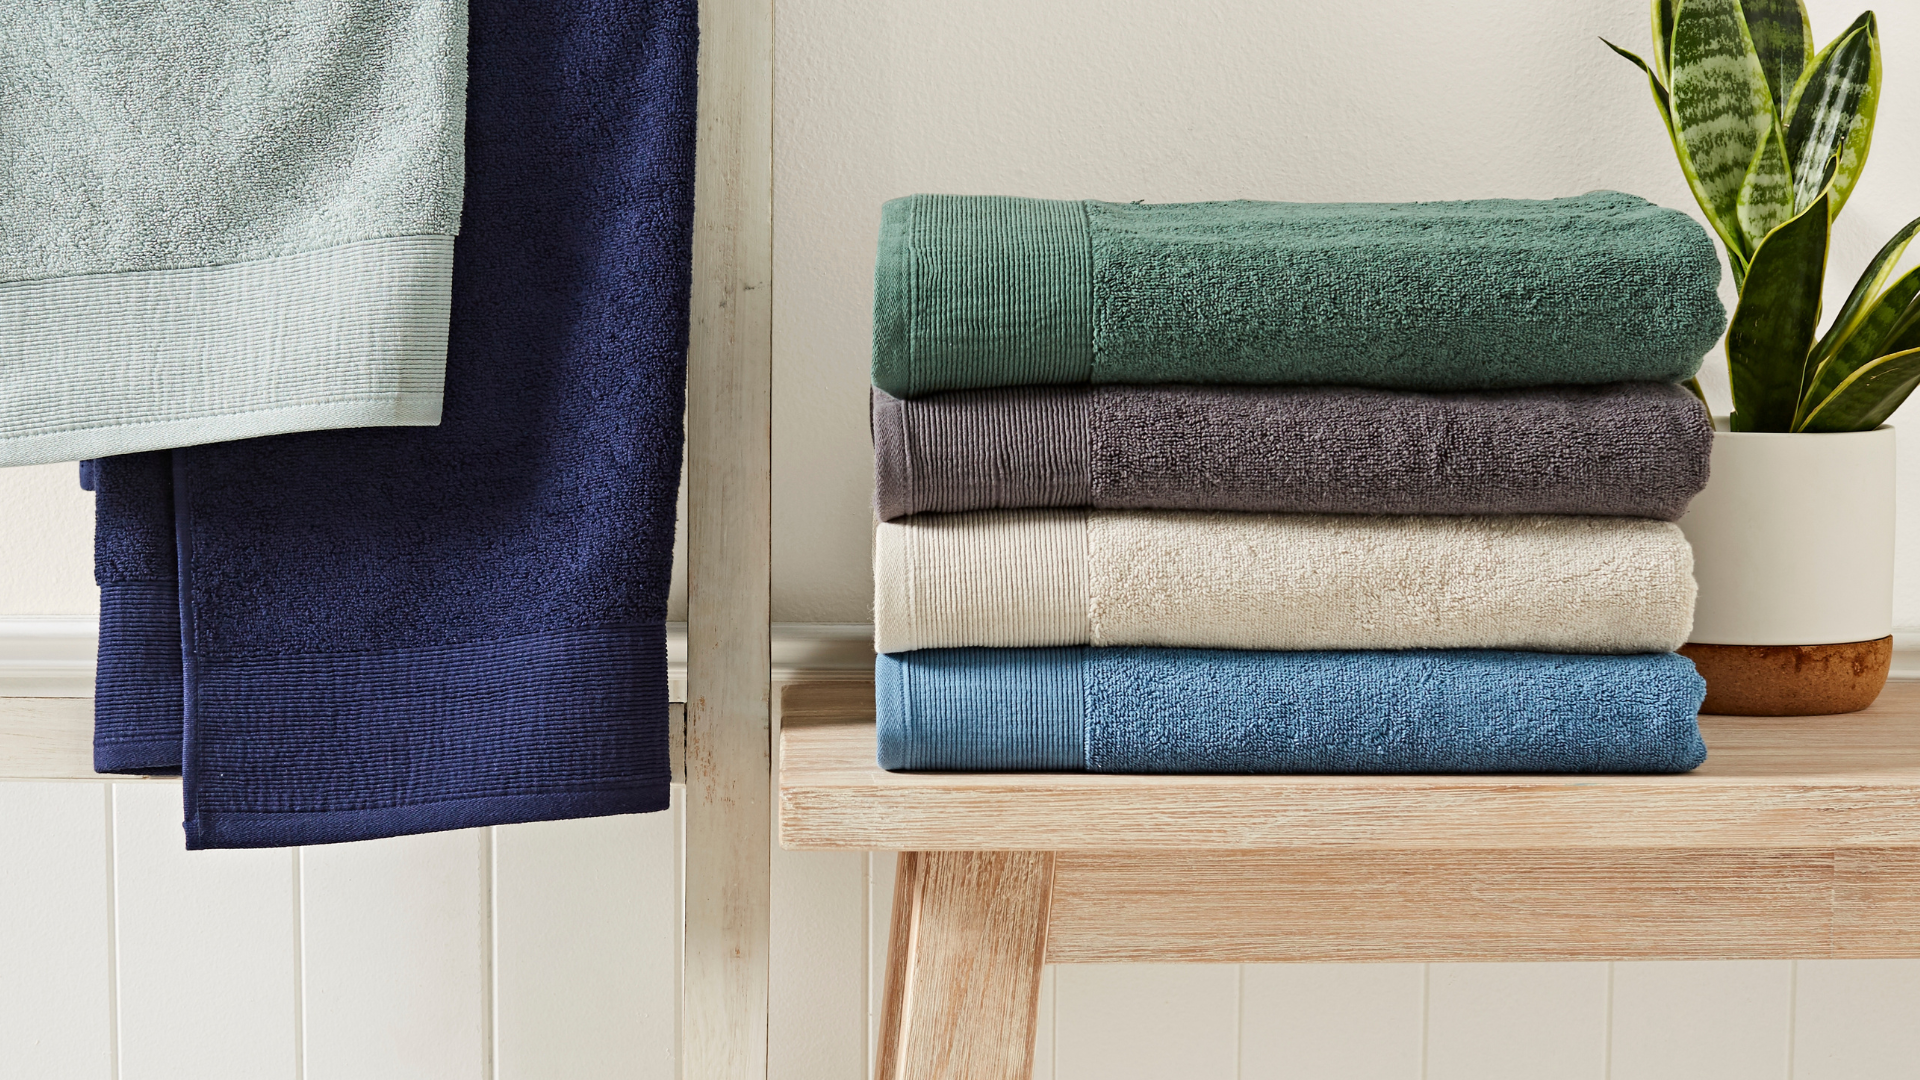 How to Make Towels Fluffy  Fluffy bath towels, Washing hacks, Towel